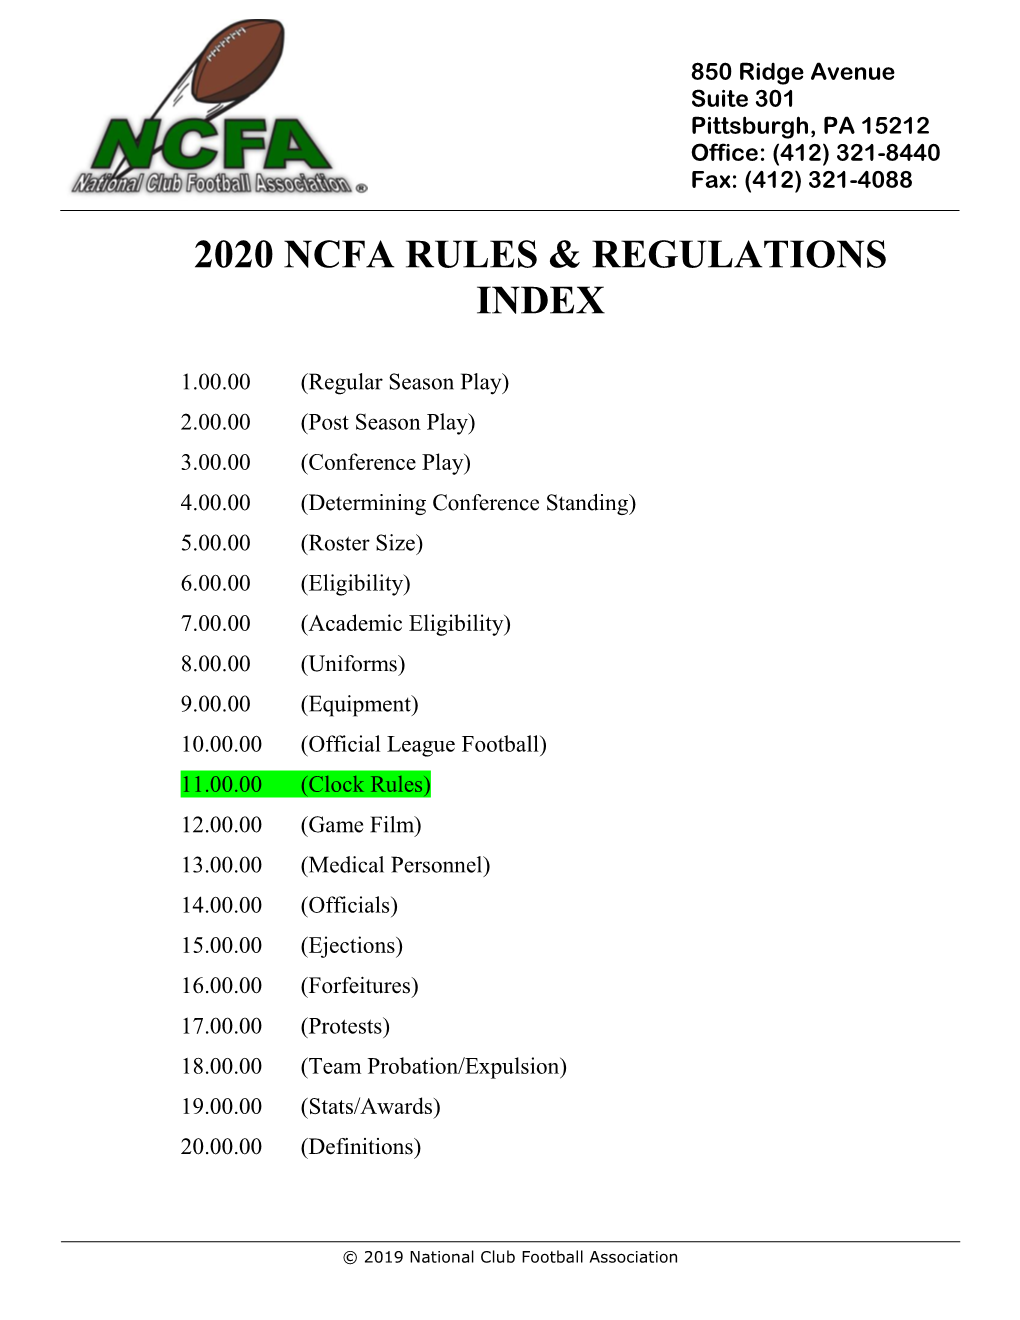 2020 Ncfa Rules & Regulations Index